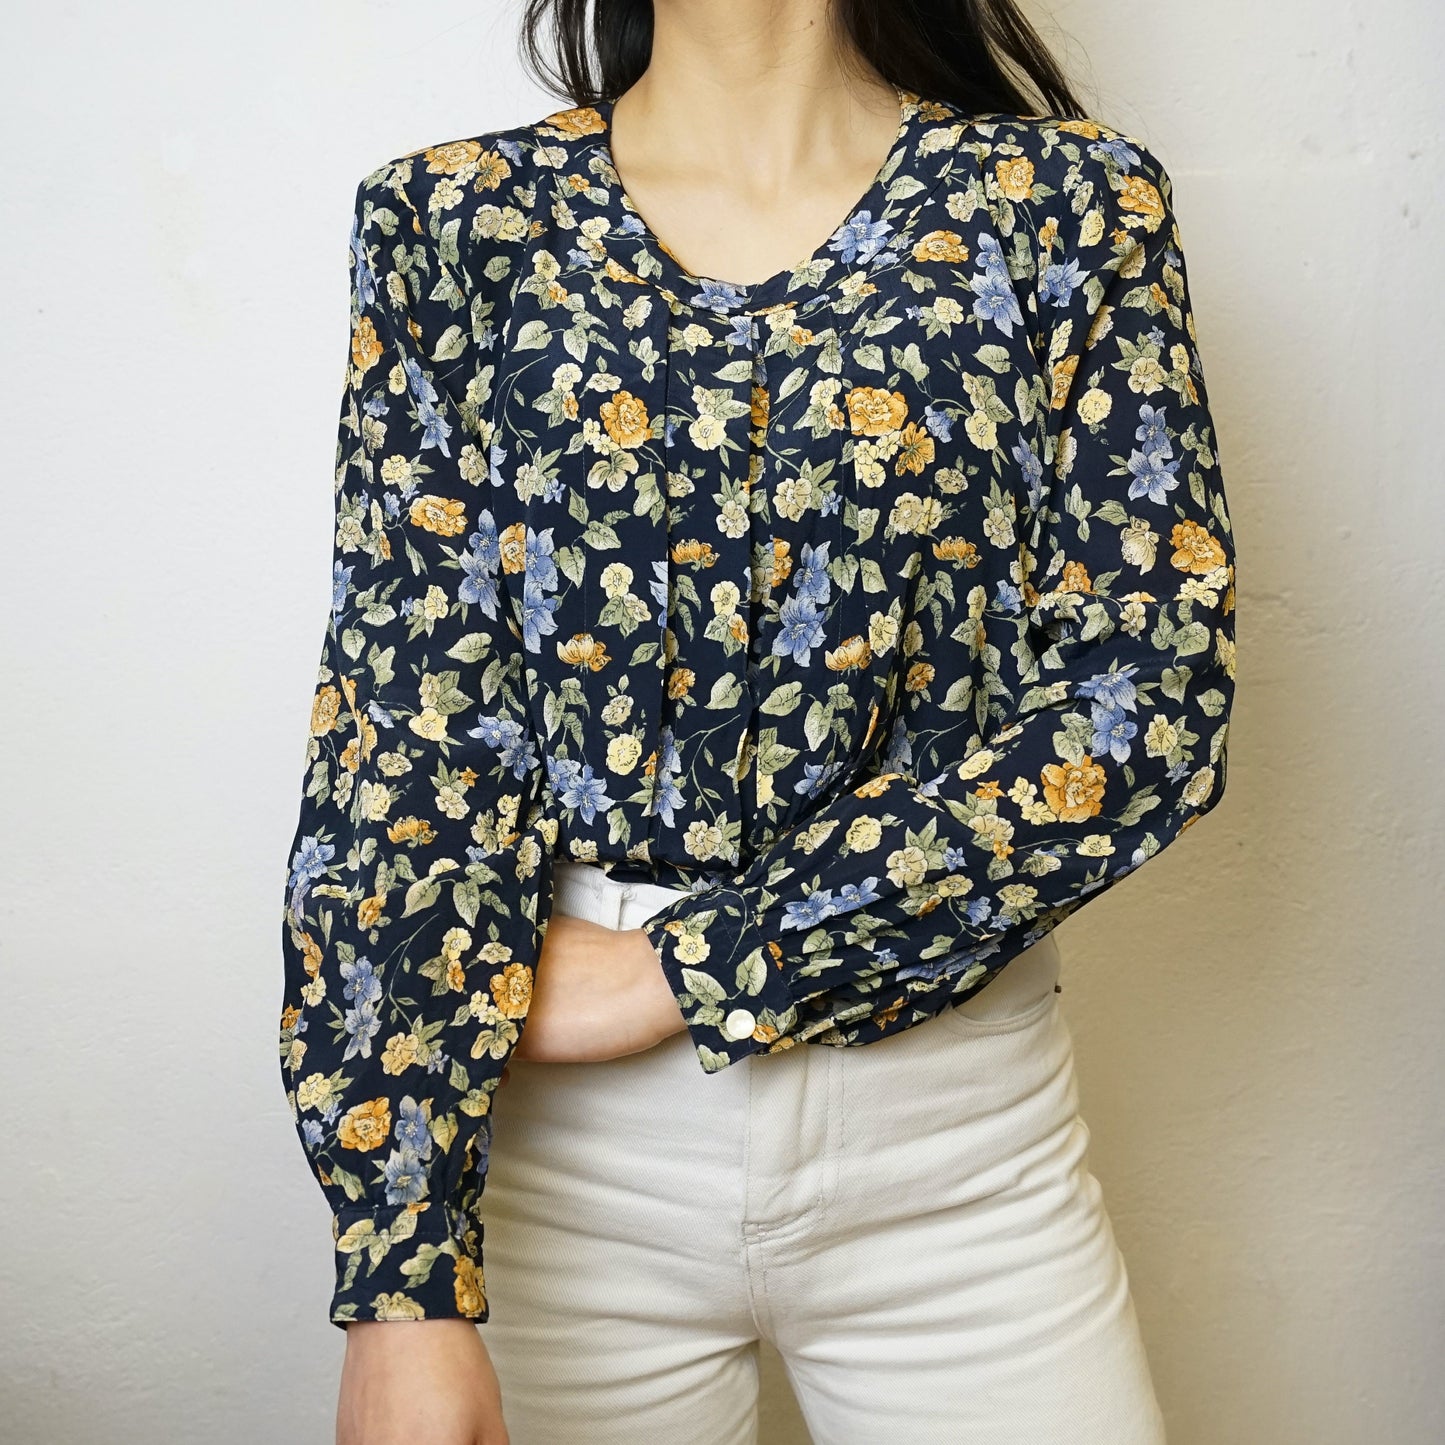 Vintage floral Blouse size S long sleeved blouse button up shirt 90s top floral shirt